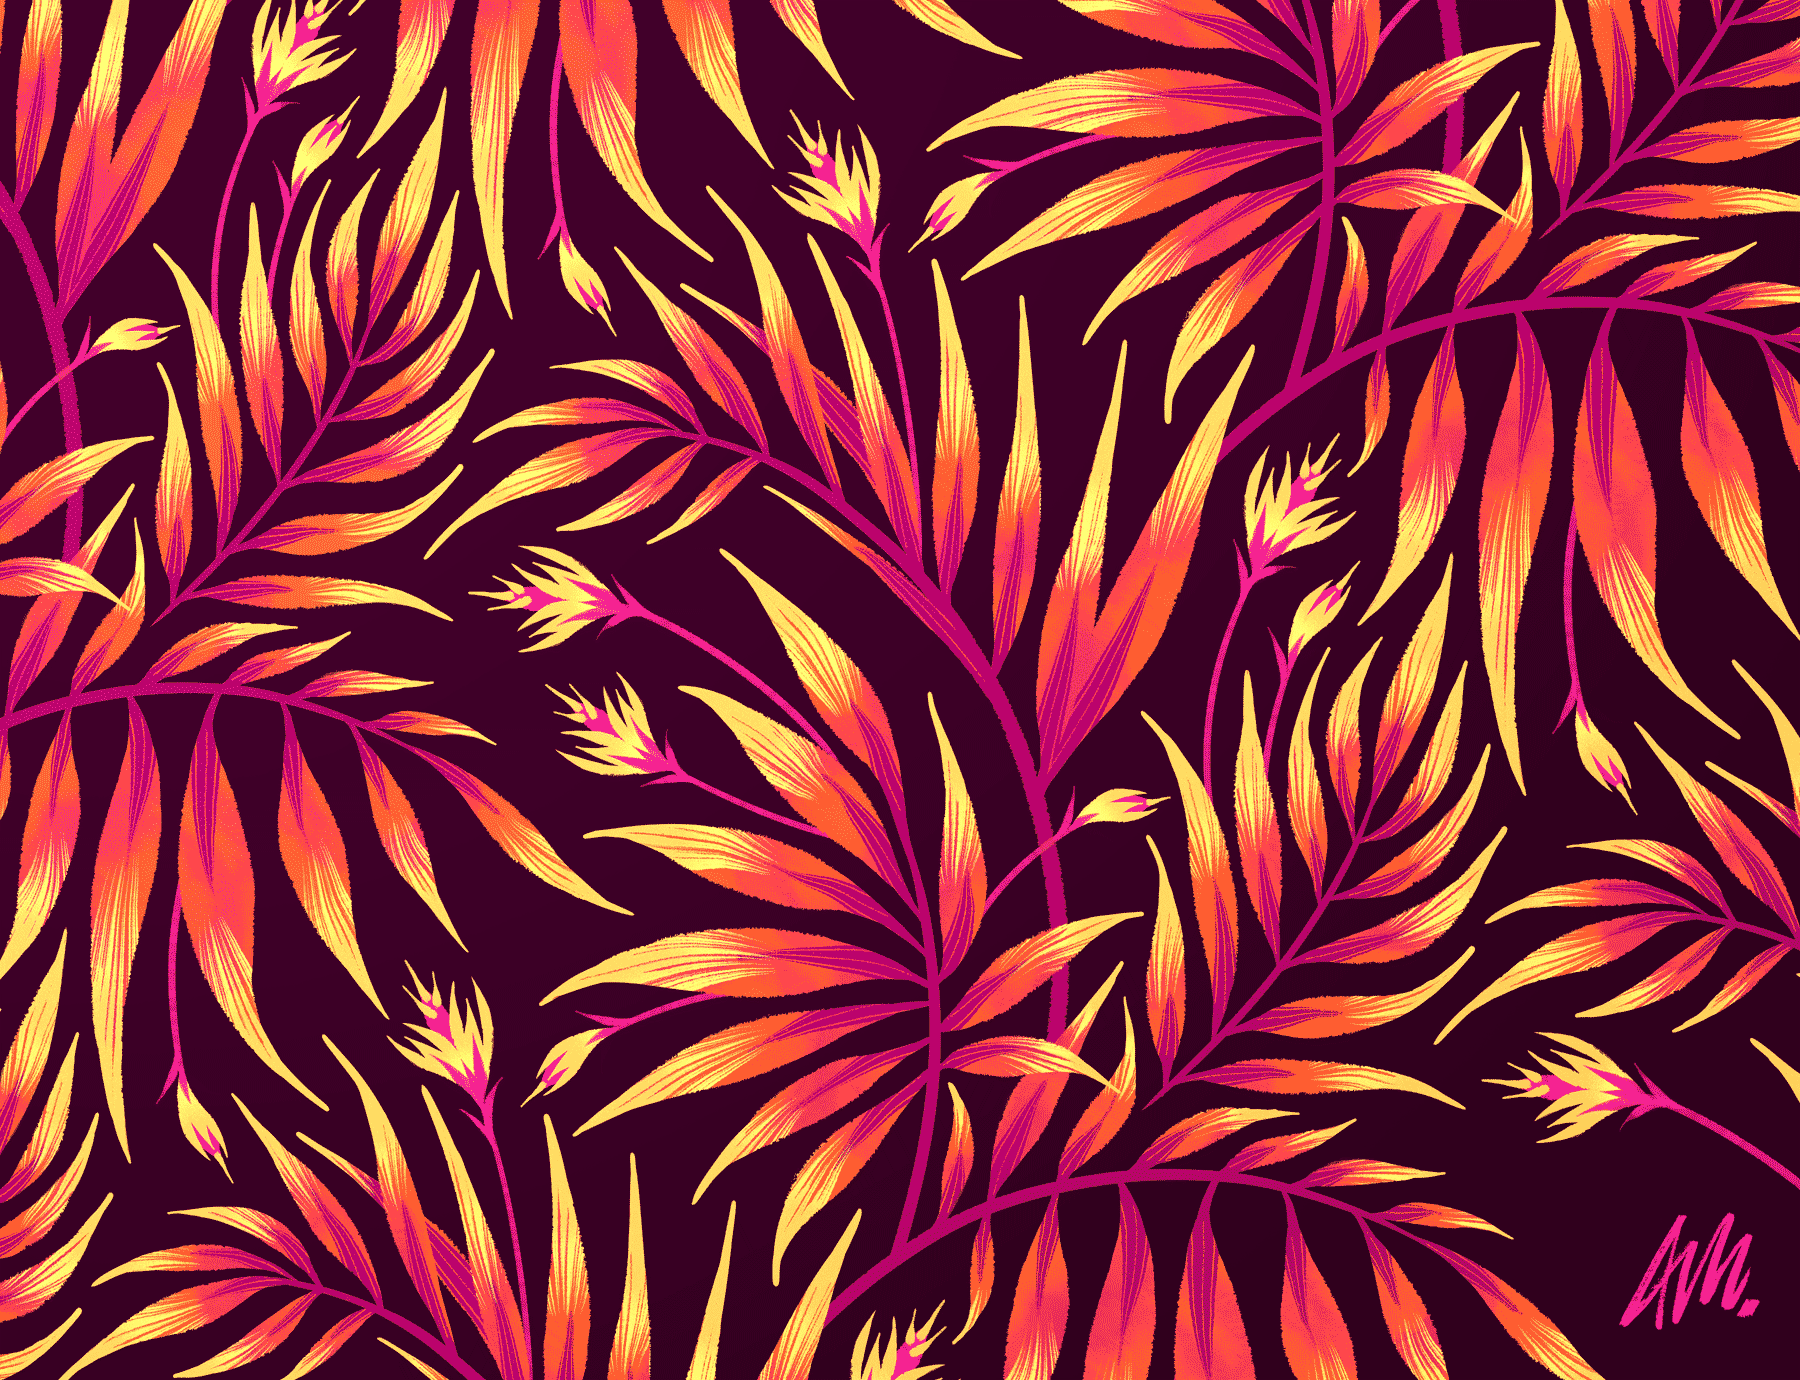 Tropical bright orange palm leaf pattern illustration by Andrea Muller